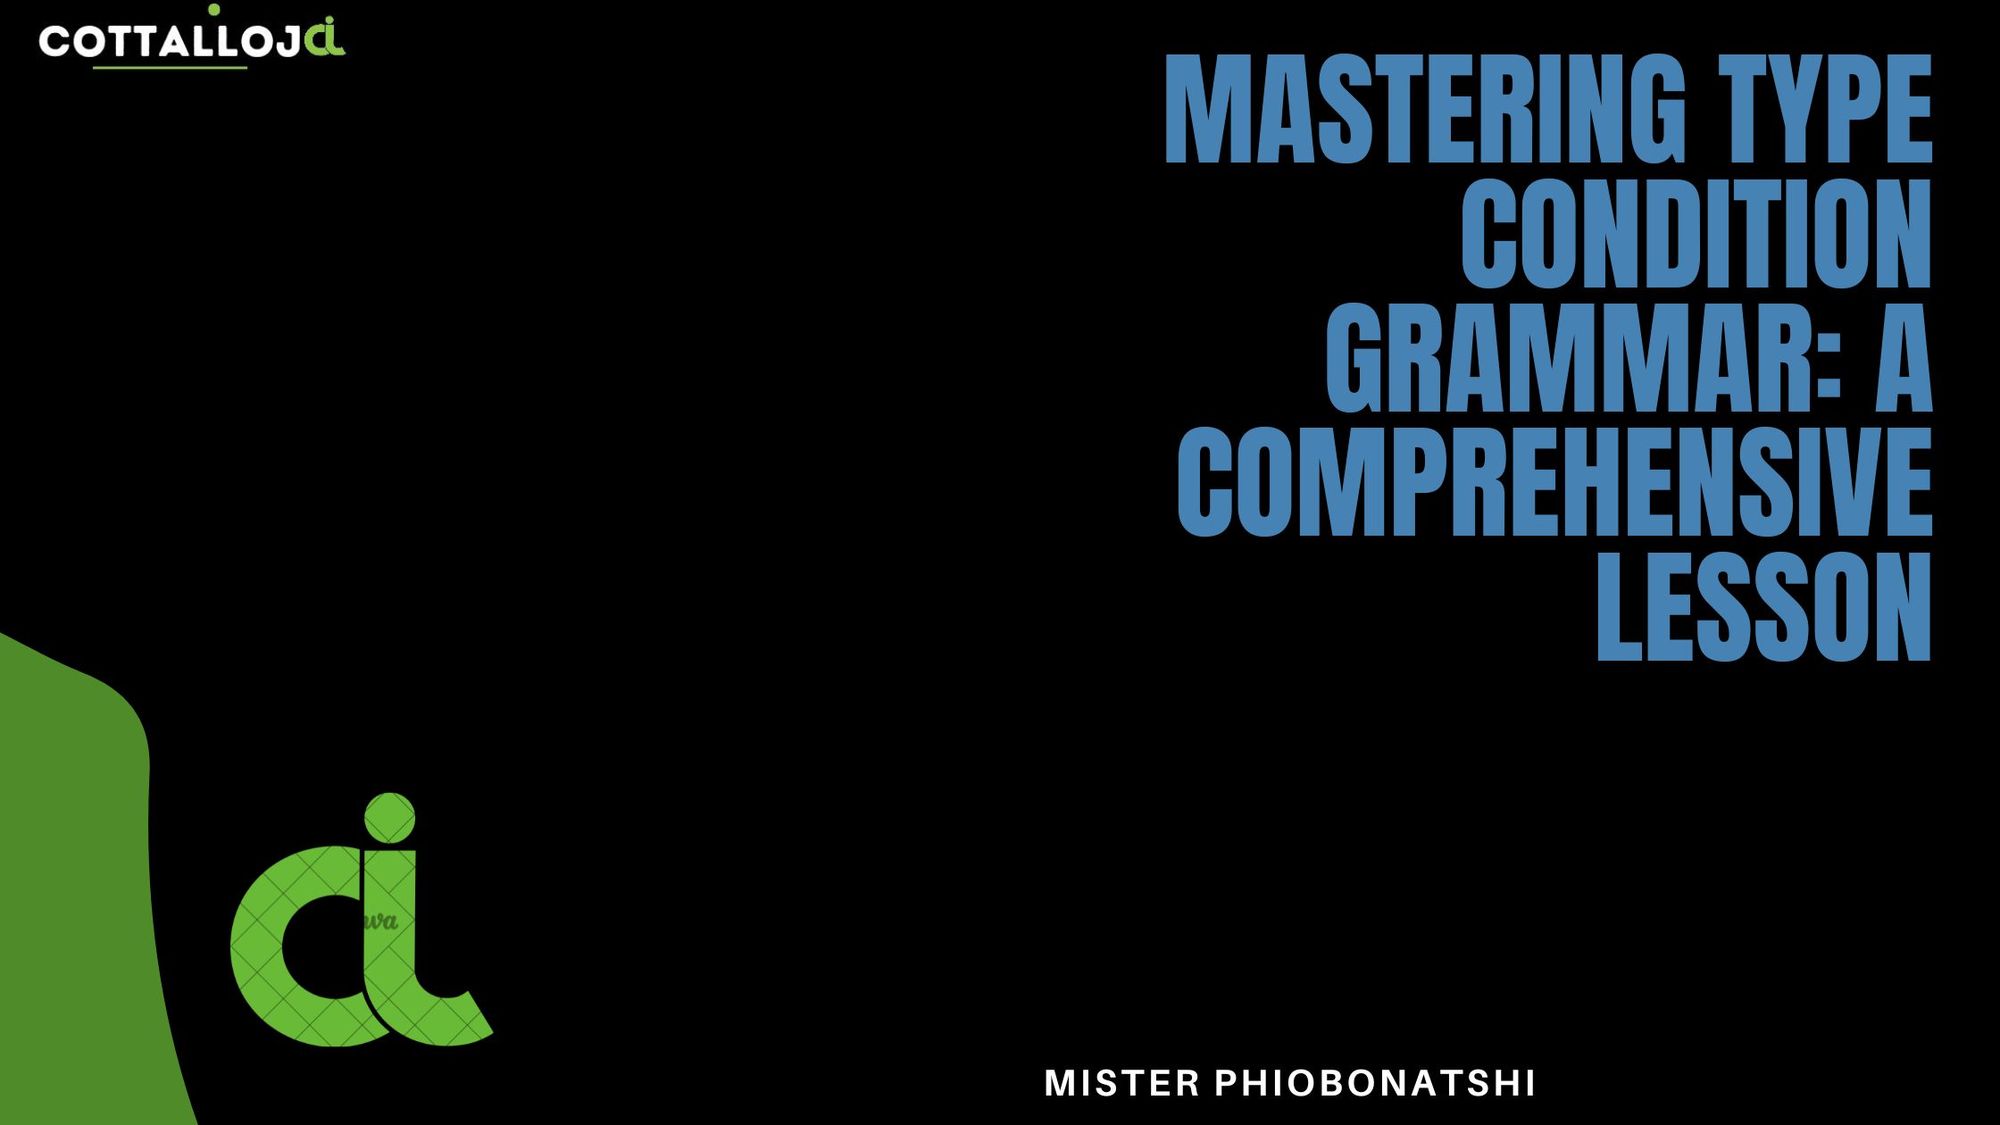 Mastering Type Condition Grammar: A Comprehensive Lesson